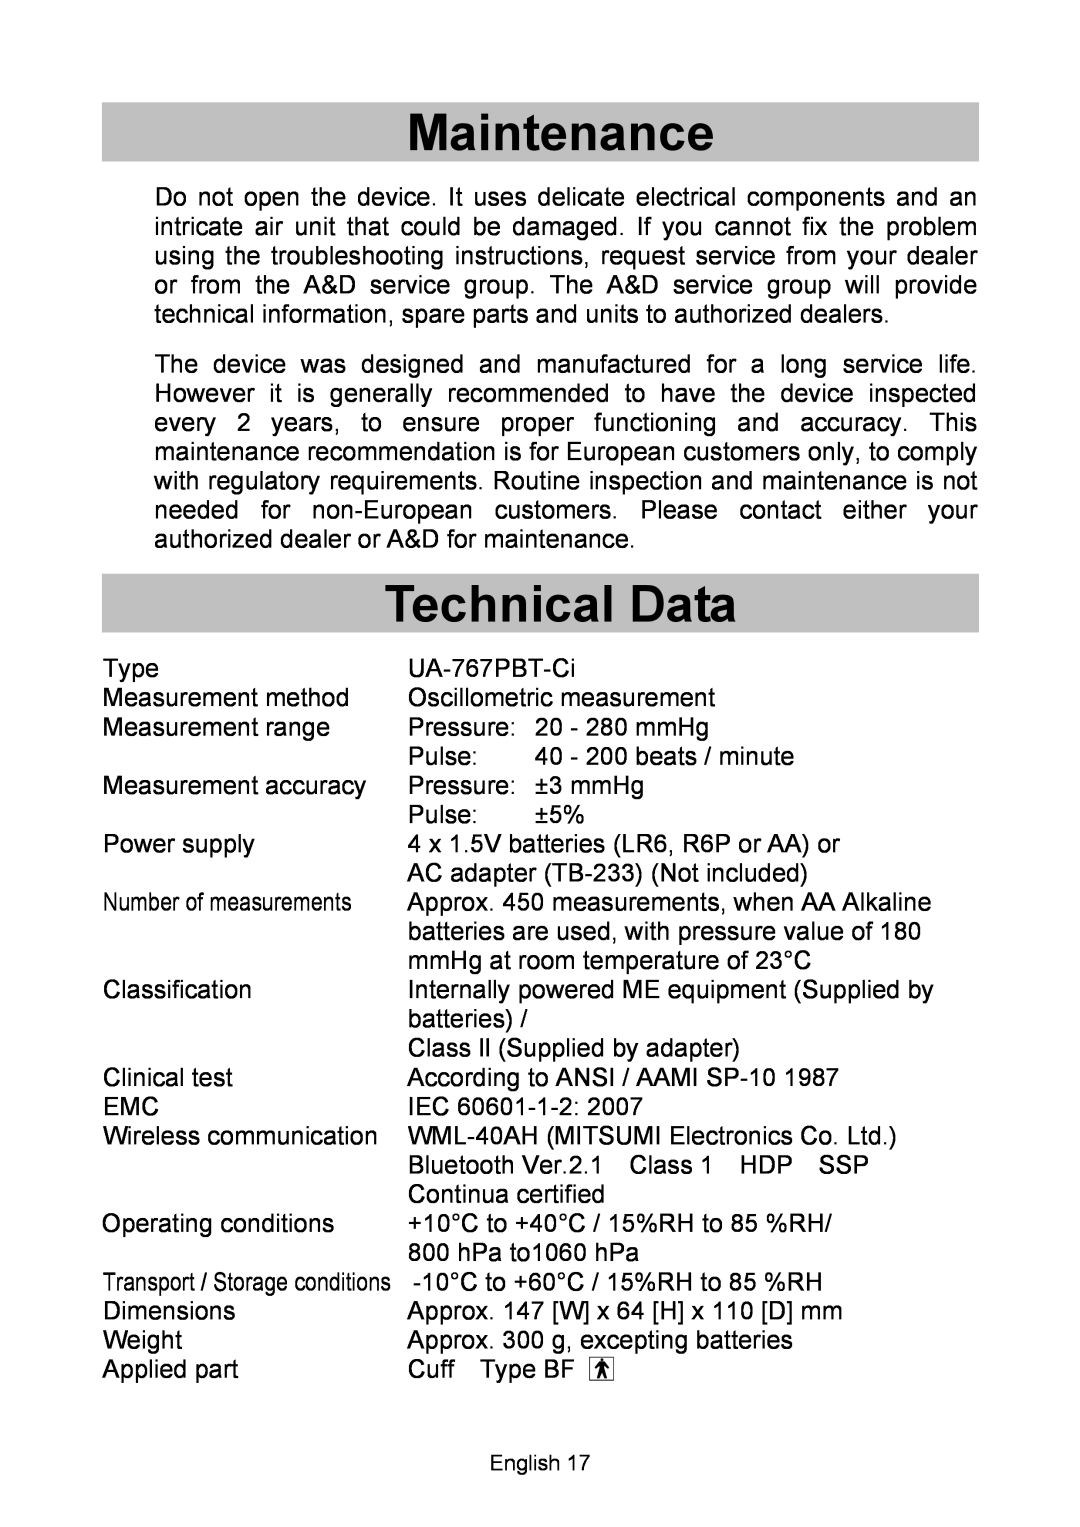 A&D BT-Ci, UA-767 instruction manual Maintenance, Technical Data, Approx. 450 measurements, when AA Alkaline 